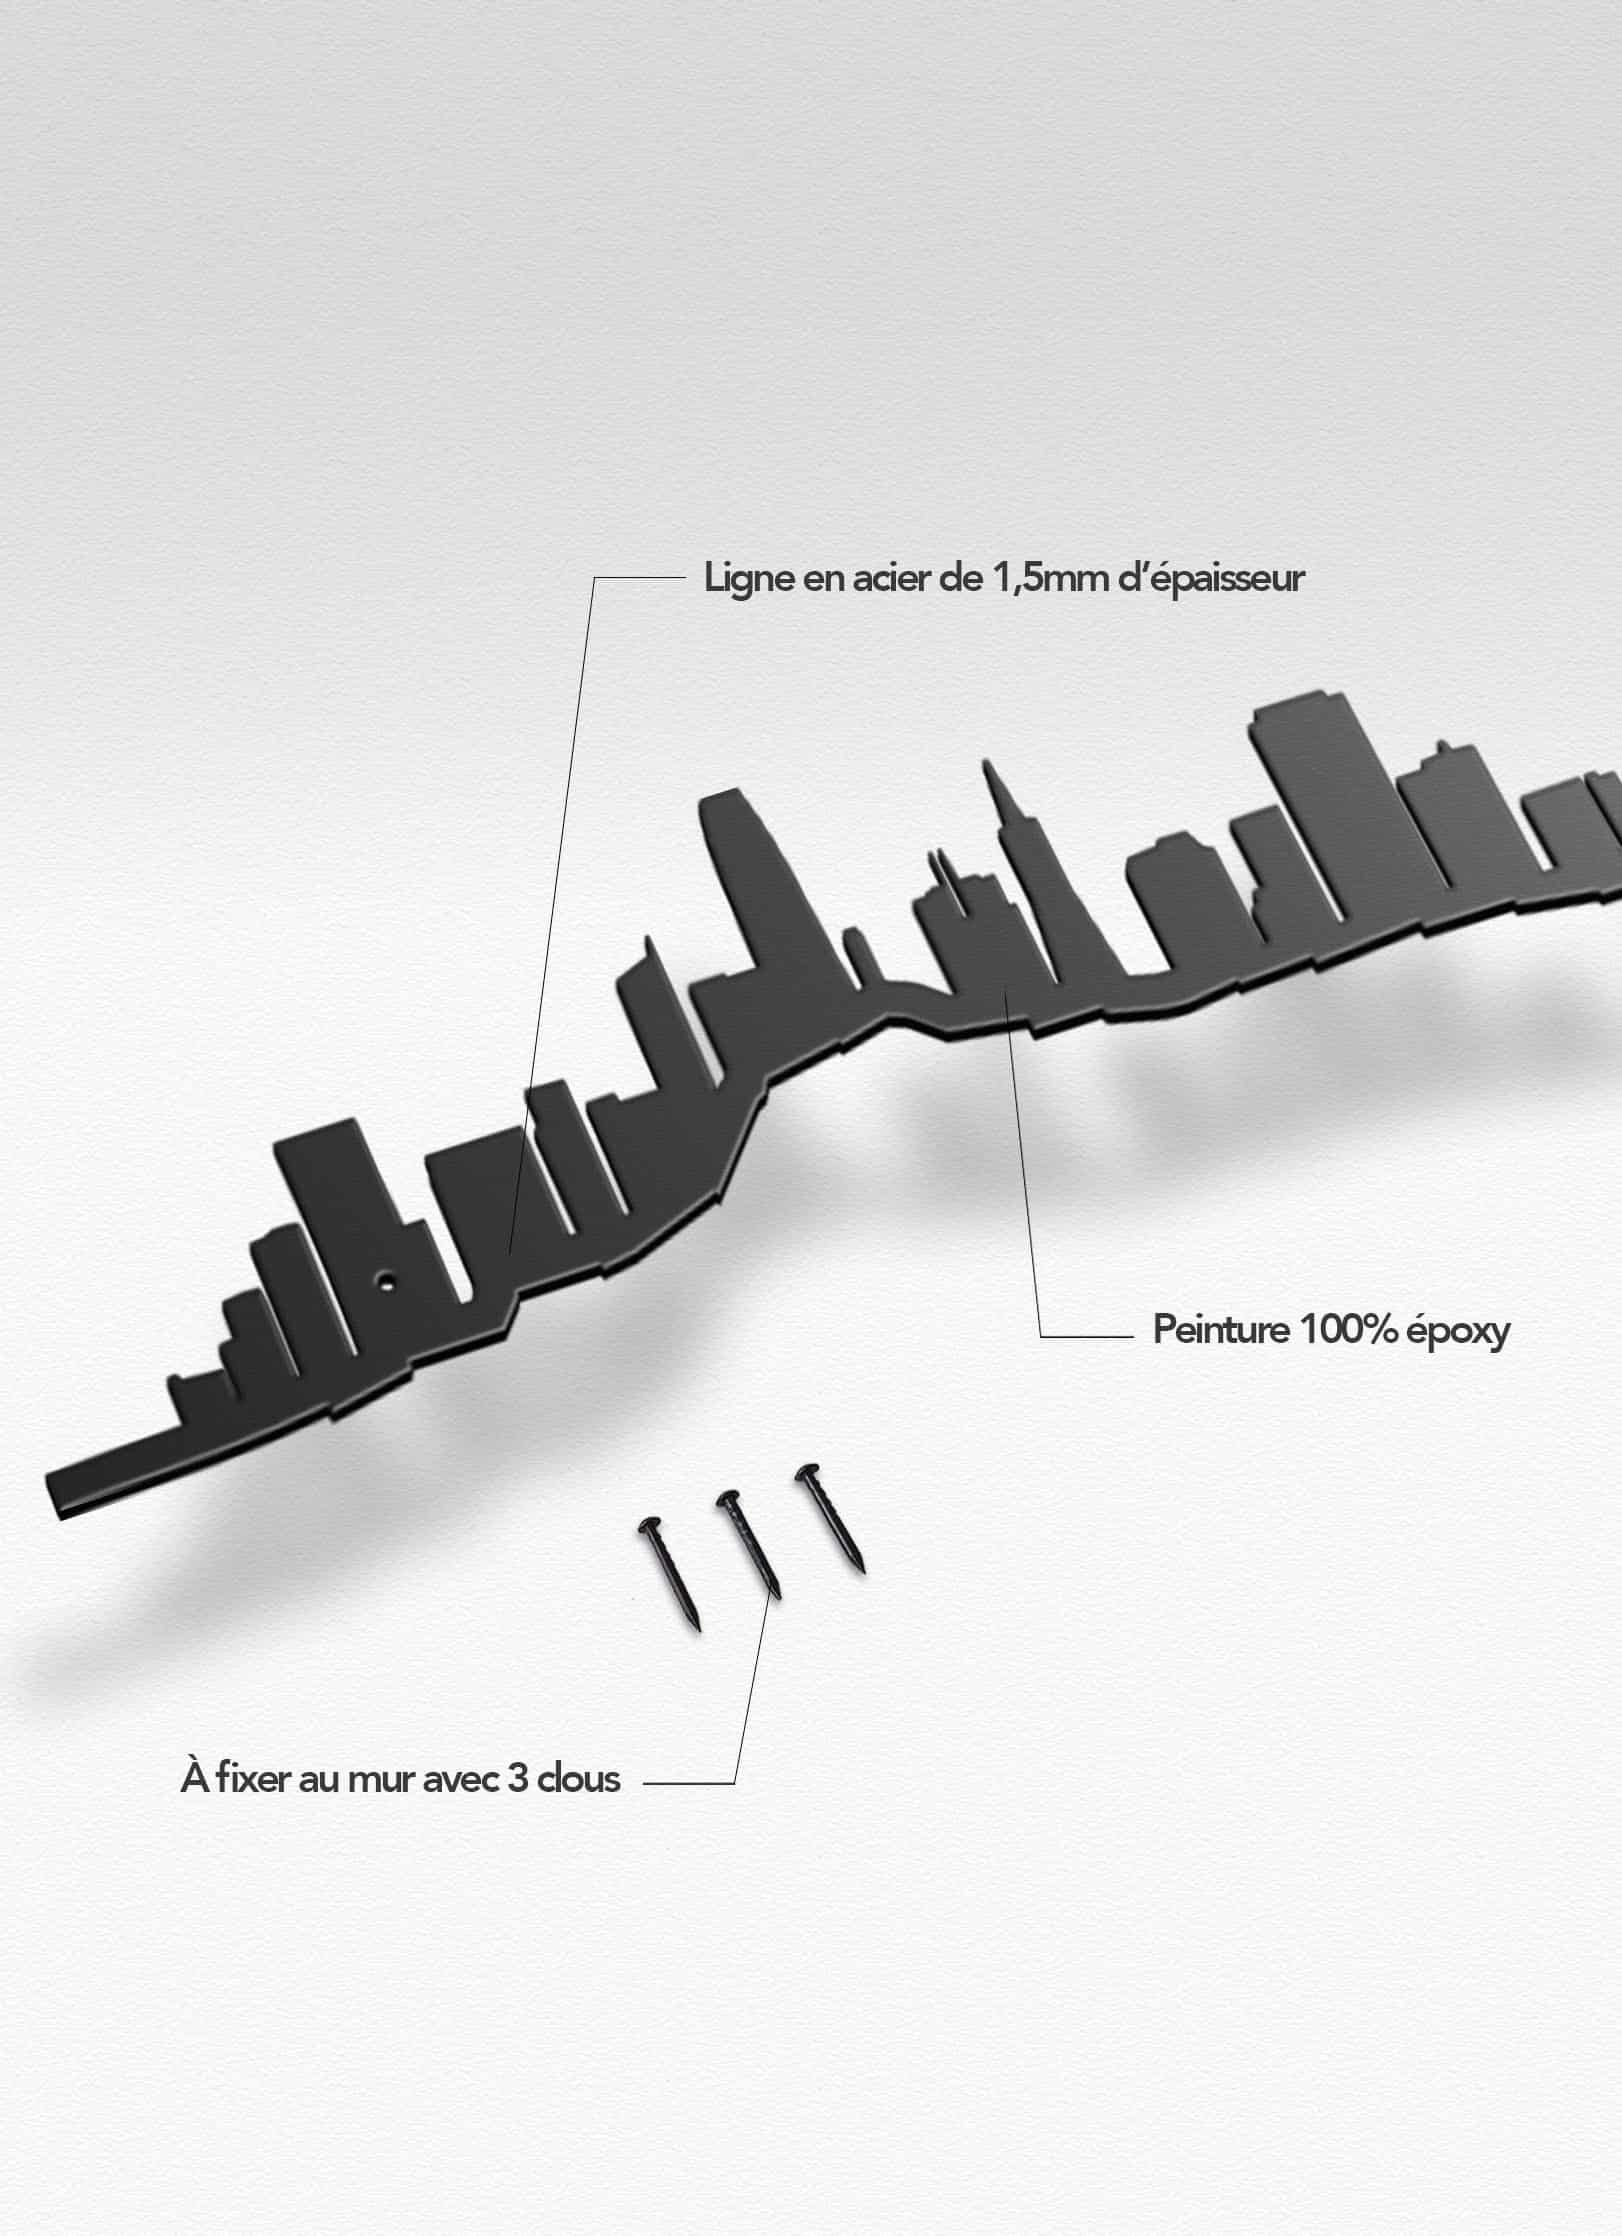 Presentation of the skyline of San Francisco 1